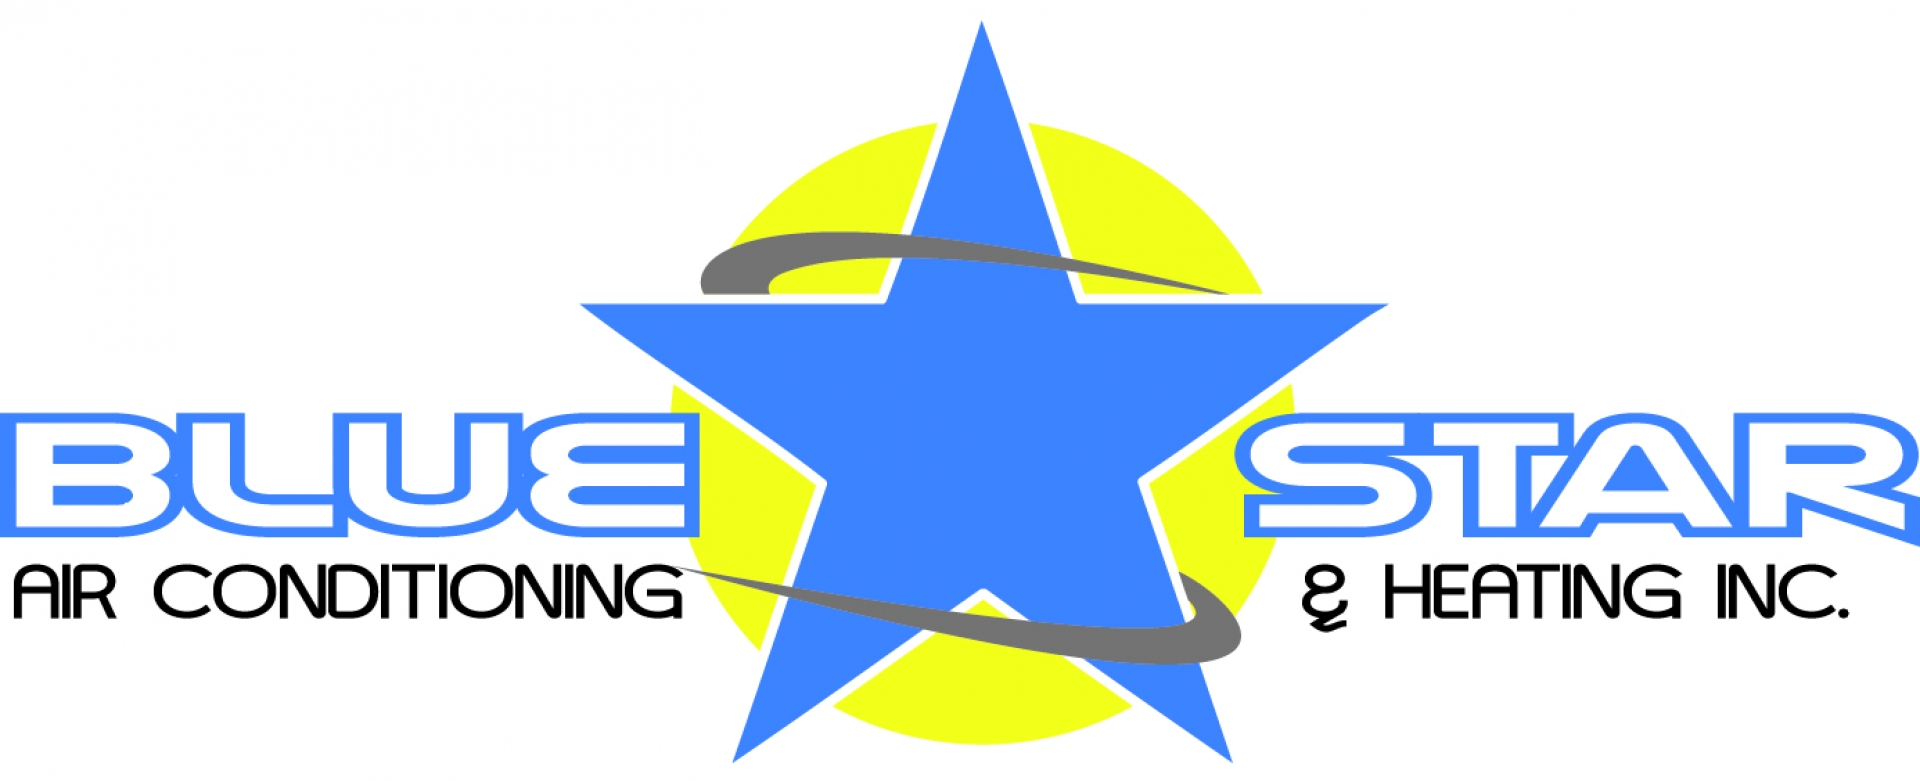 Blue Star HVAC Inc. company logo